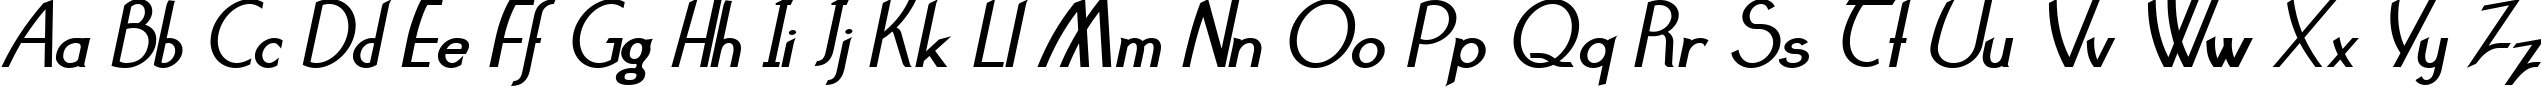 Пример написания английского алфавита шрифтом Claritty_BoldItalic